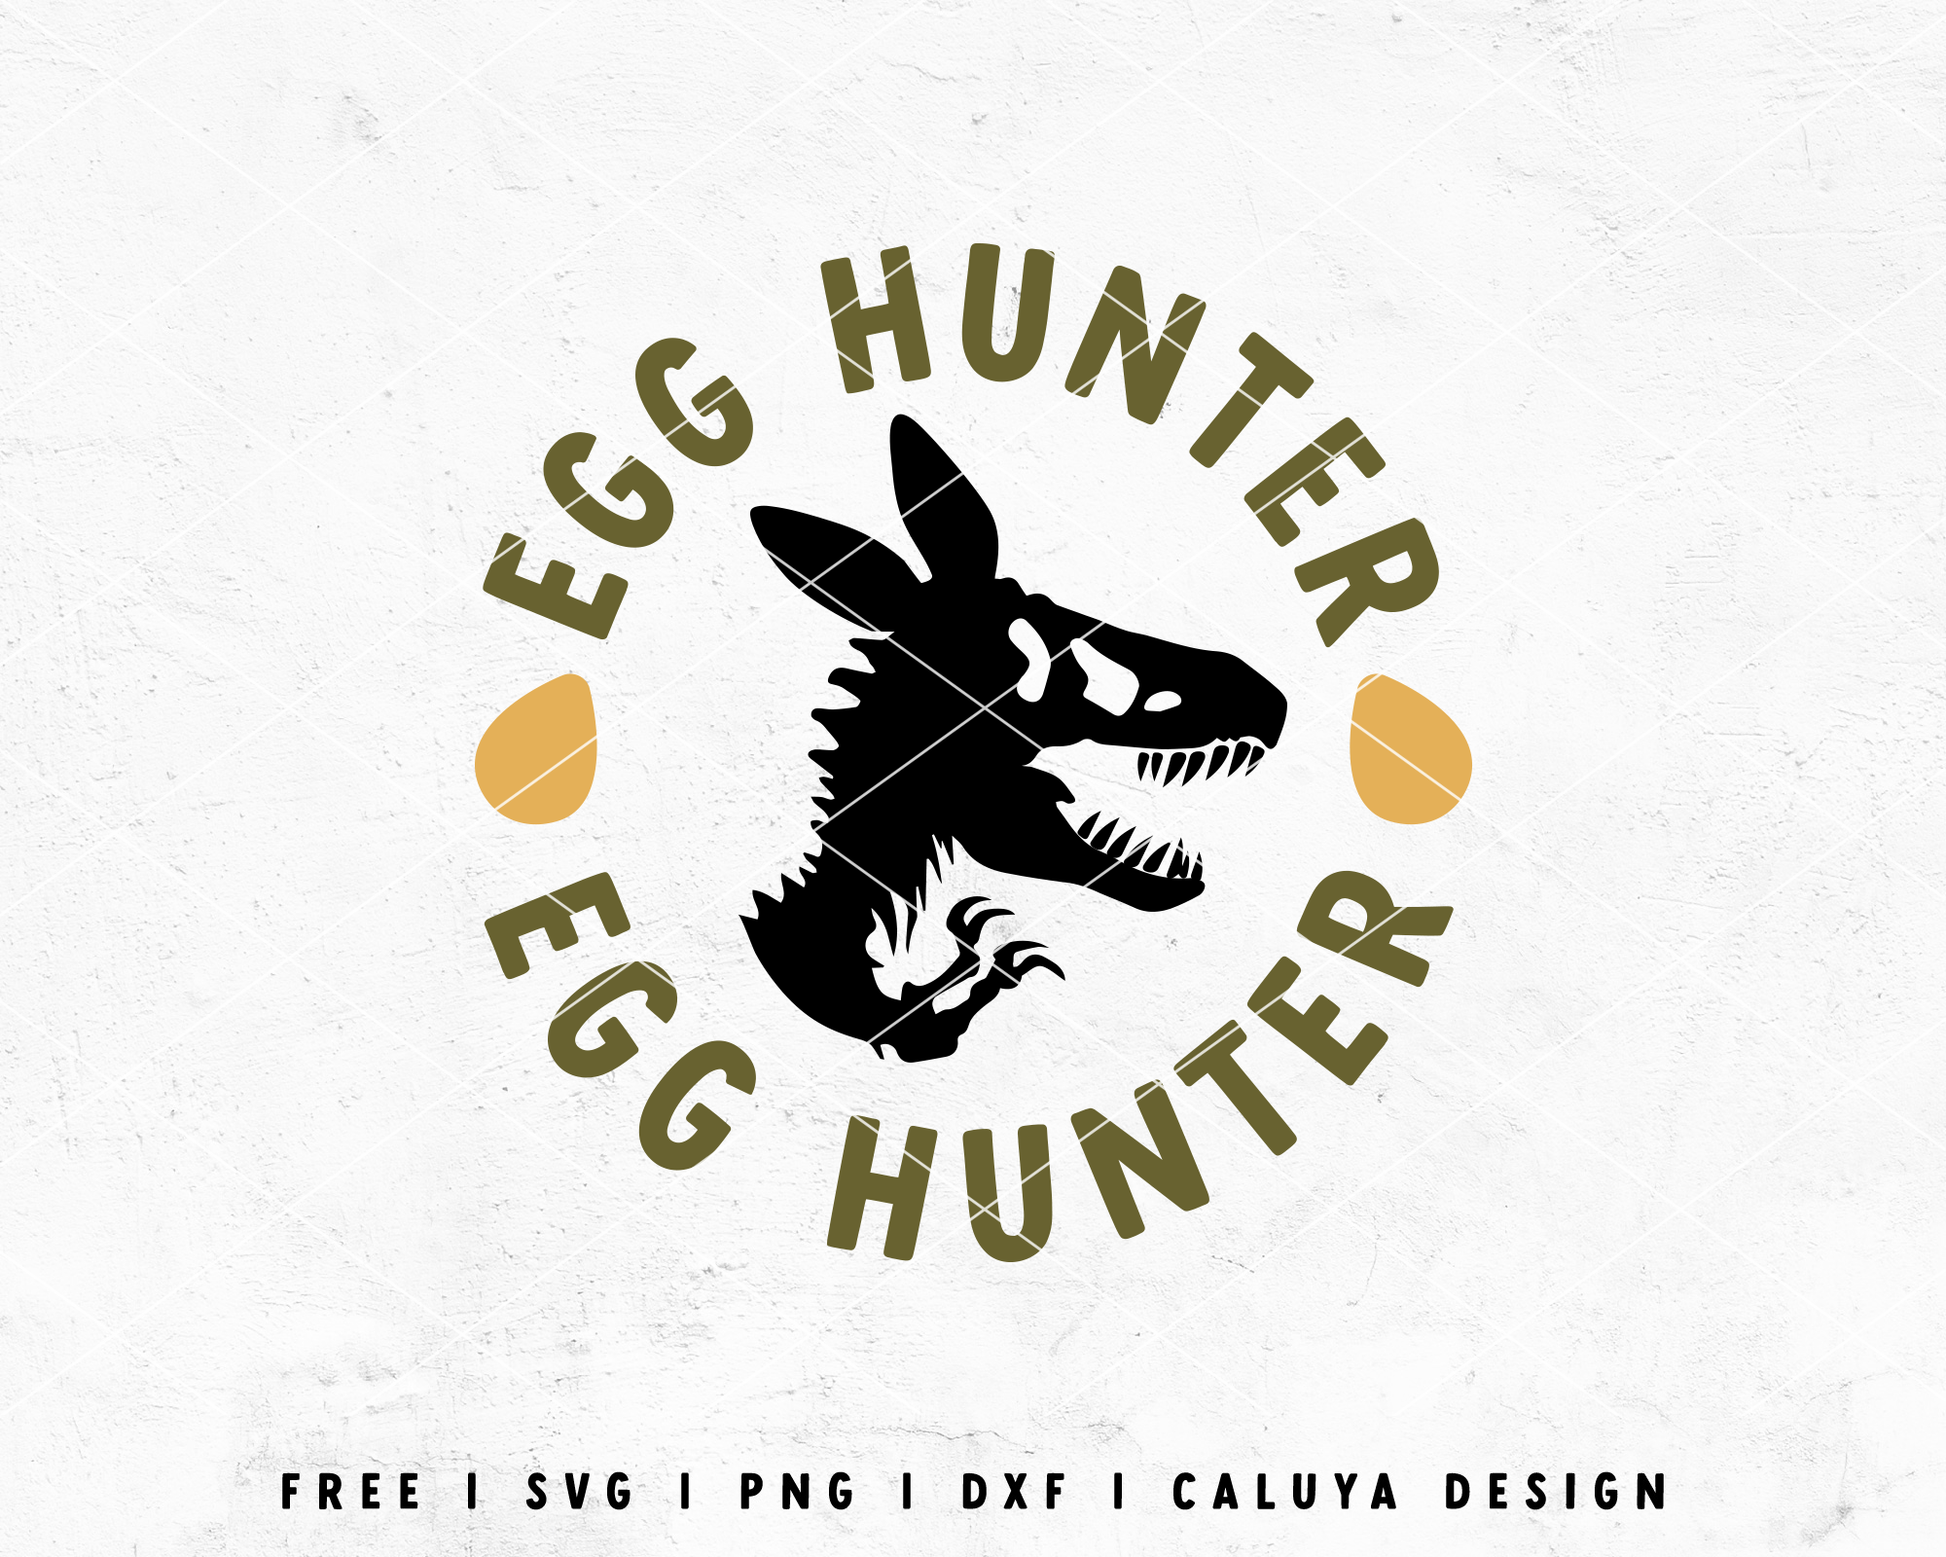 FREE Easter SVG | Egg Hunter SVG | T-Rex SVG Cut File for Cricut, Cameo Silhouette | Free SVG Cut File